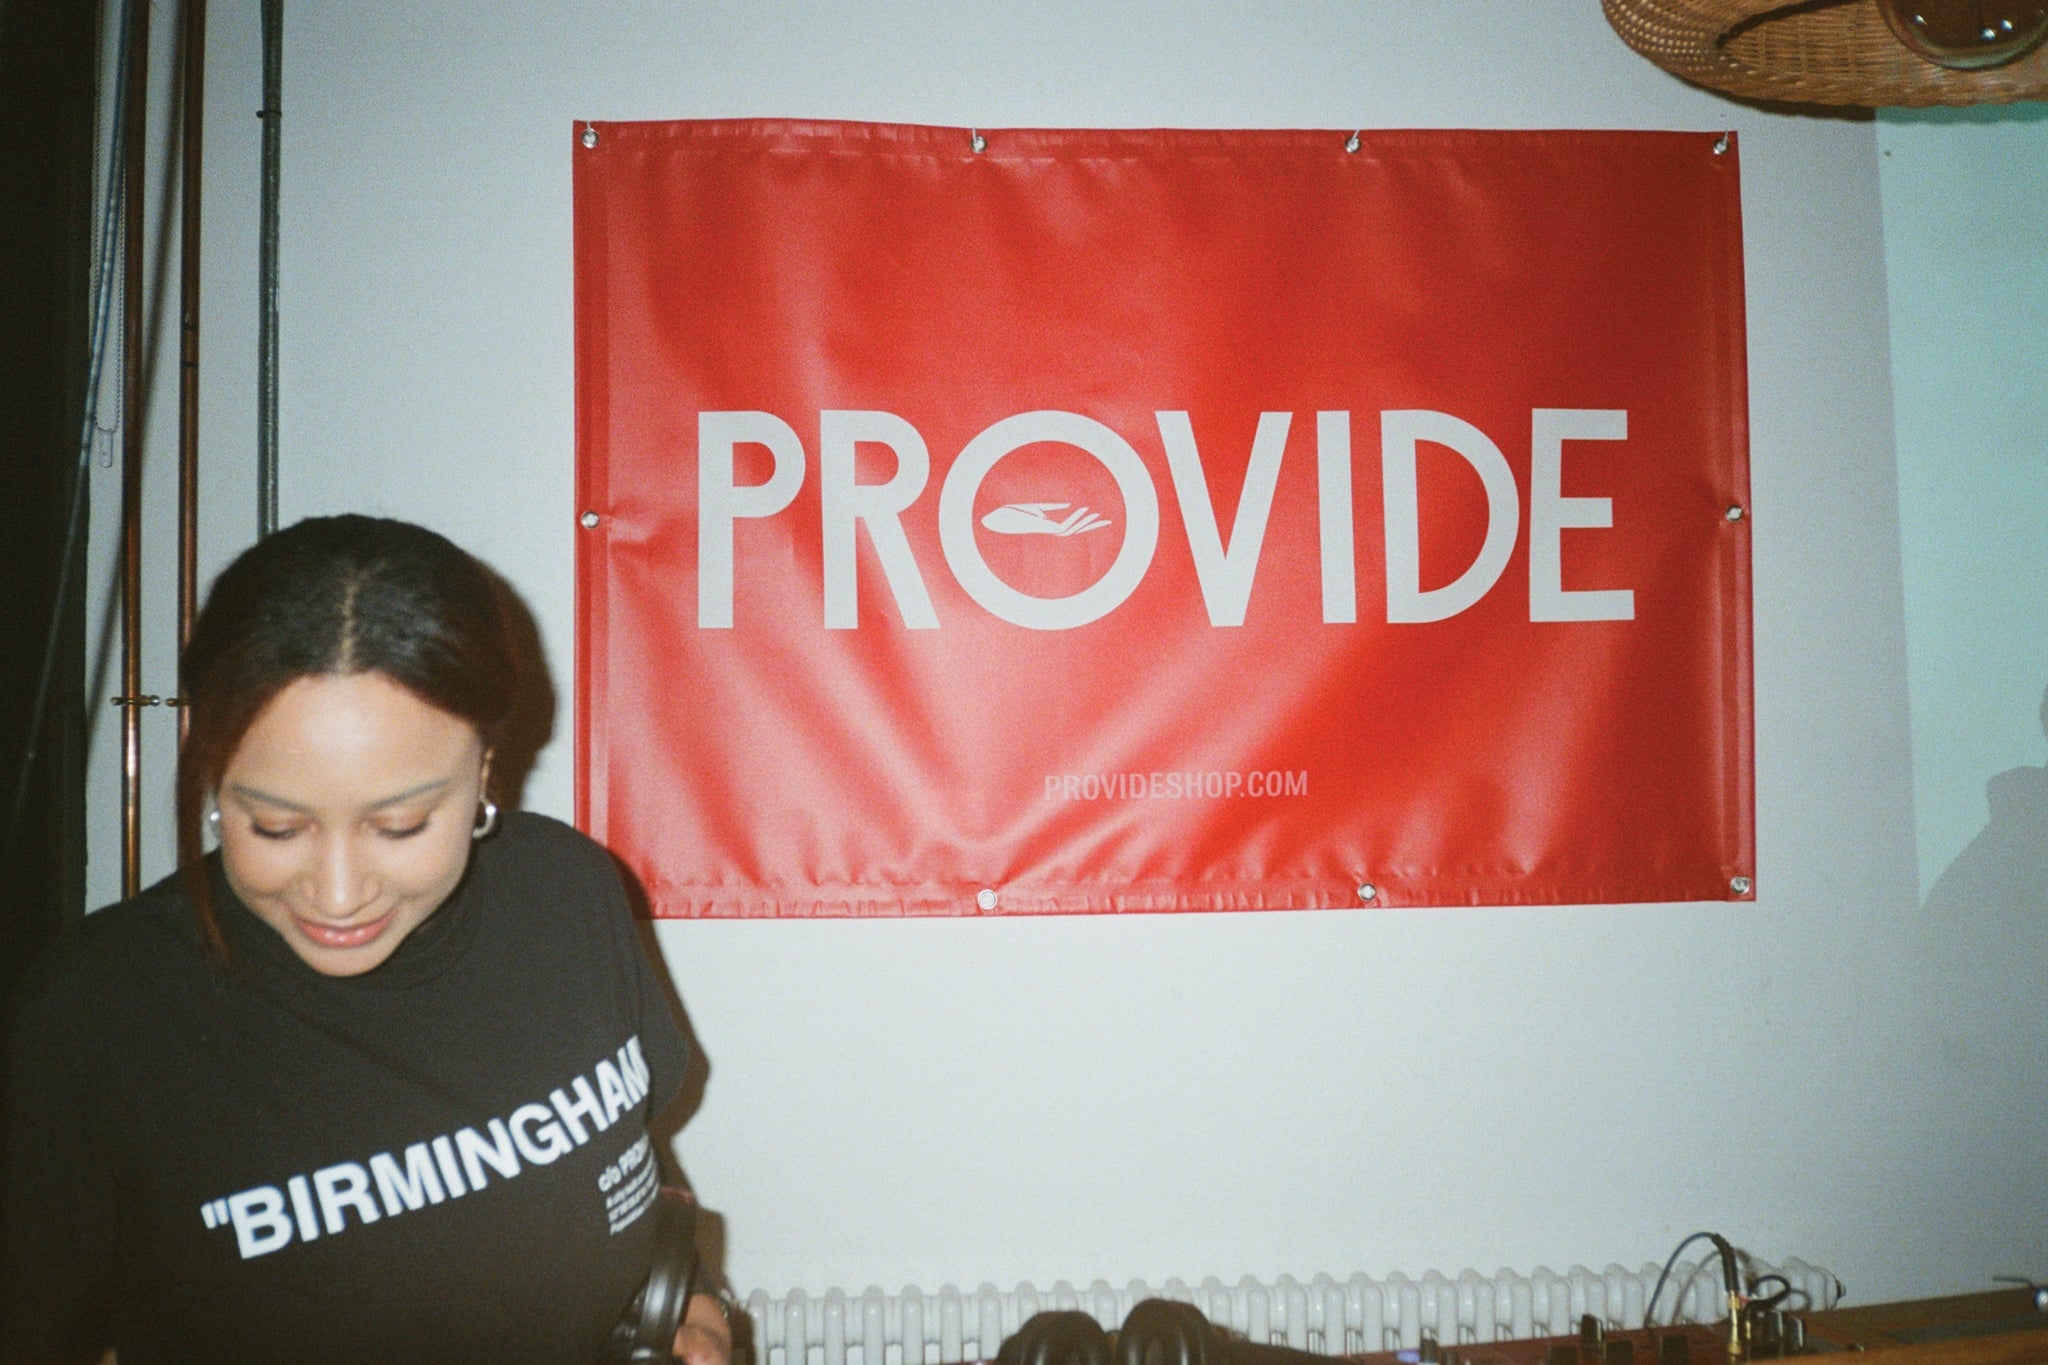 Jossy Mitsu DJ's at Provide's launch event at Artum, Birmingham.